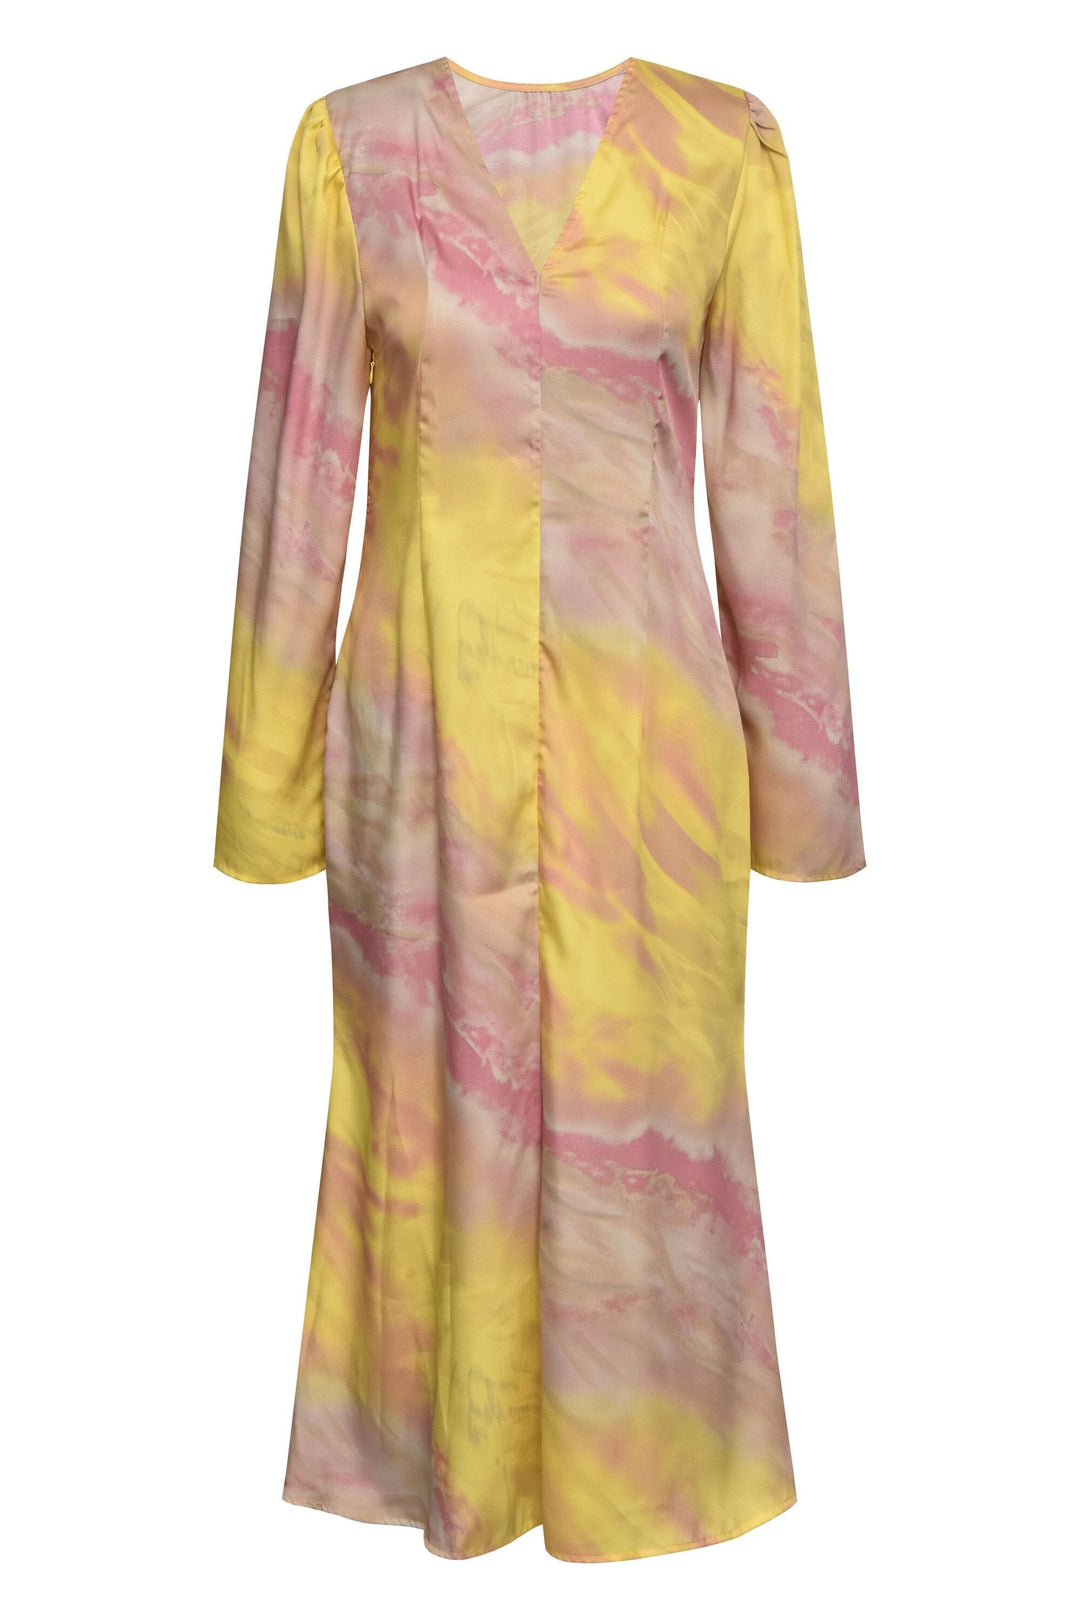 Forudbestilling - A-View - Carina Dress - 302 Yellow/Rose Kjoler 